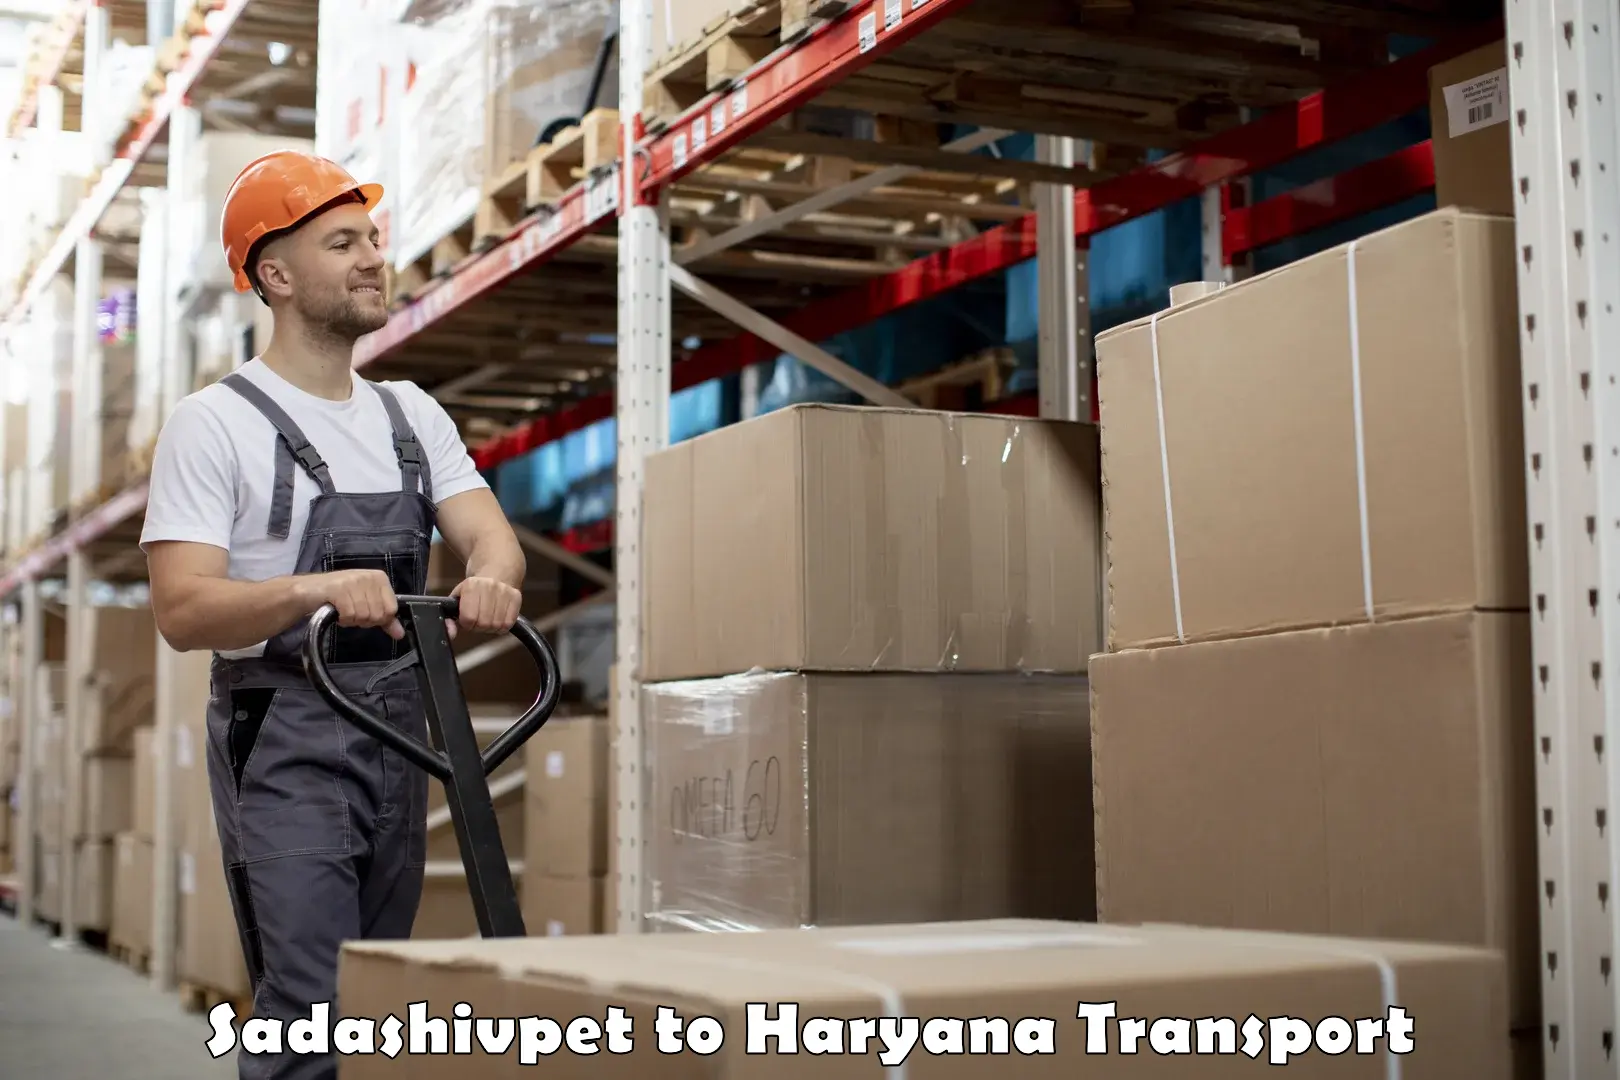 Truck transport companies in India Sadashivpet to Nuh